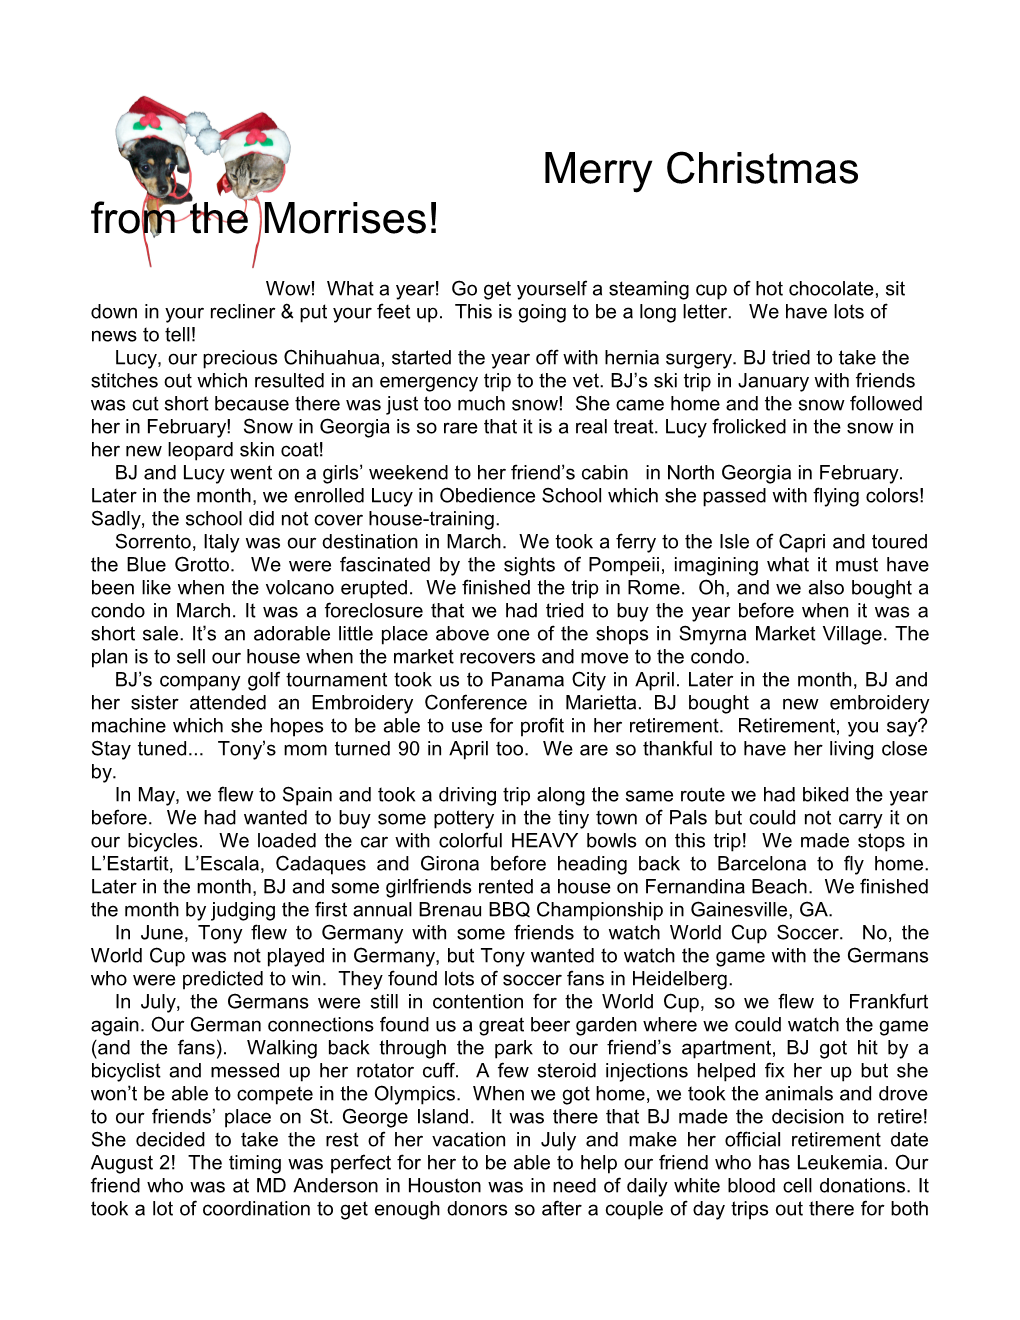 2010 BJ and Tony Morris Christmas Letter